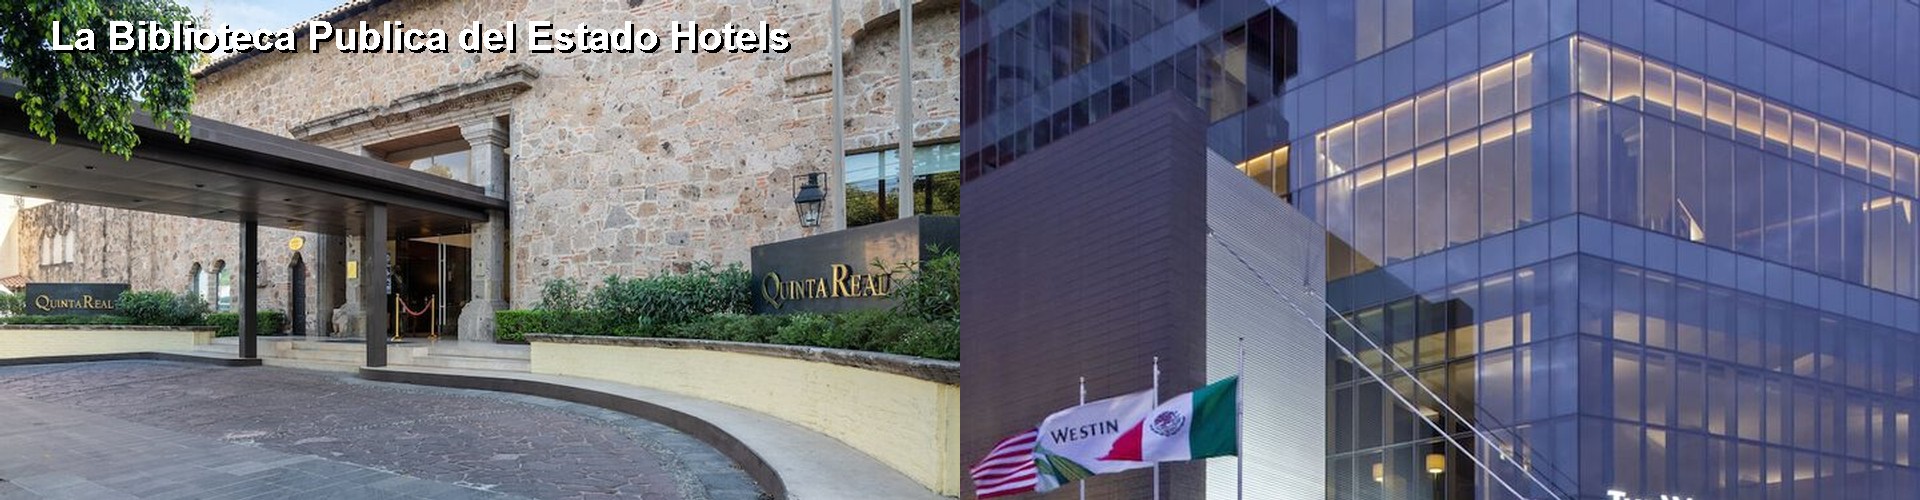 5 Best Hotels near La Biblioteca Publica del Estado